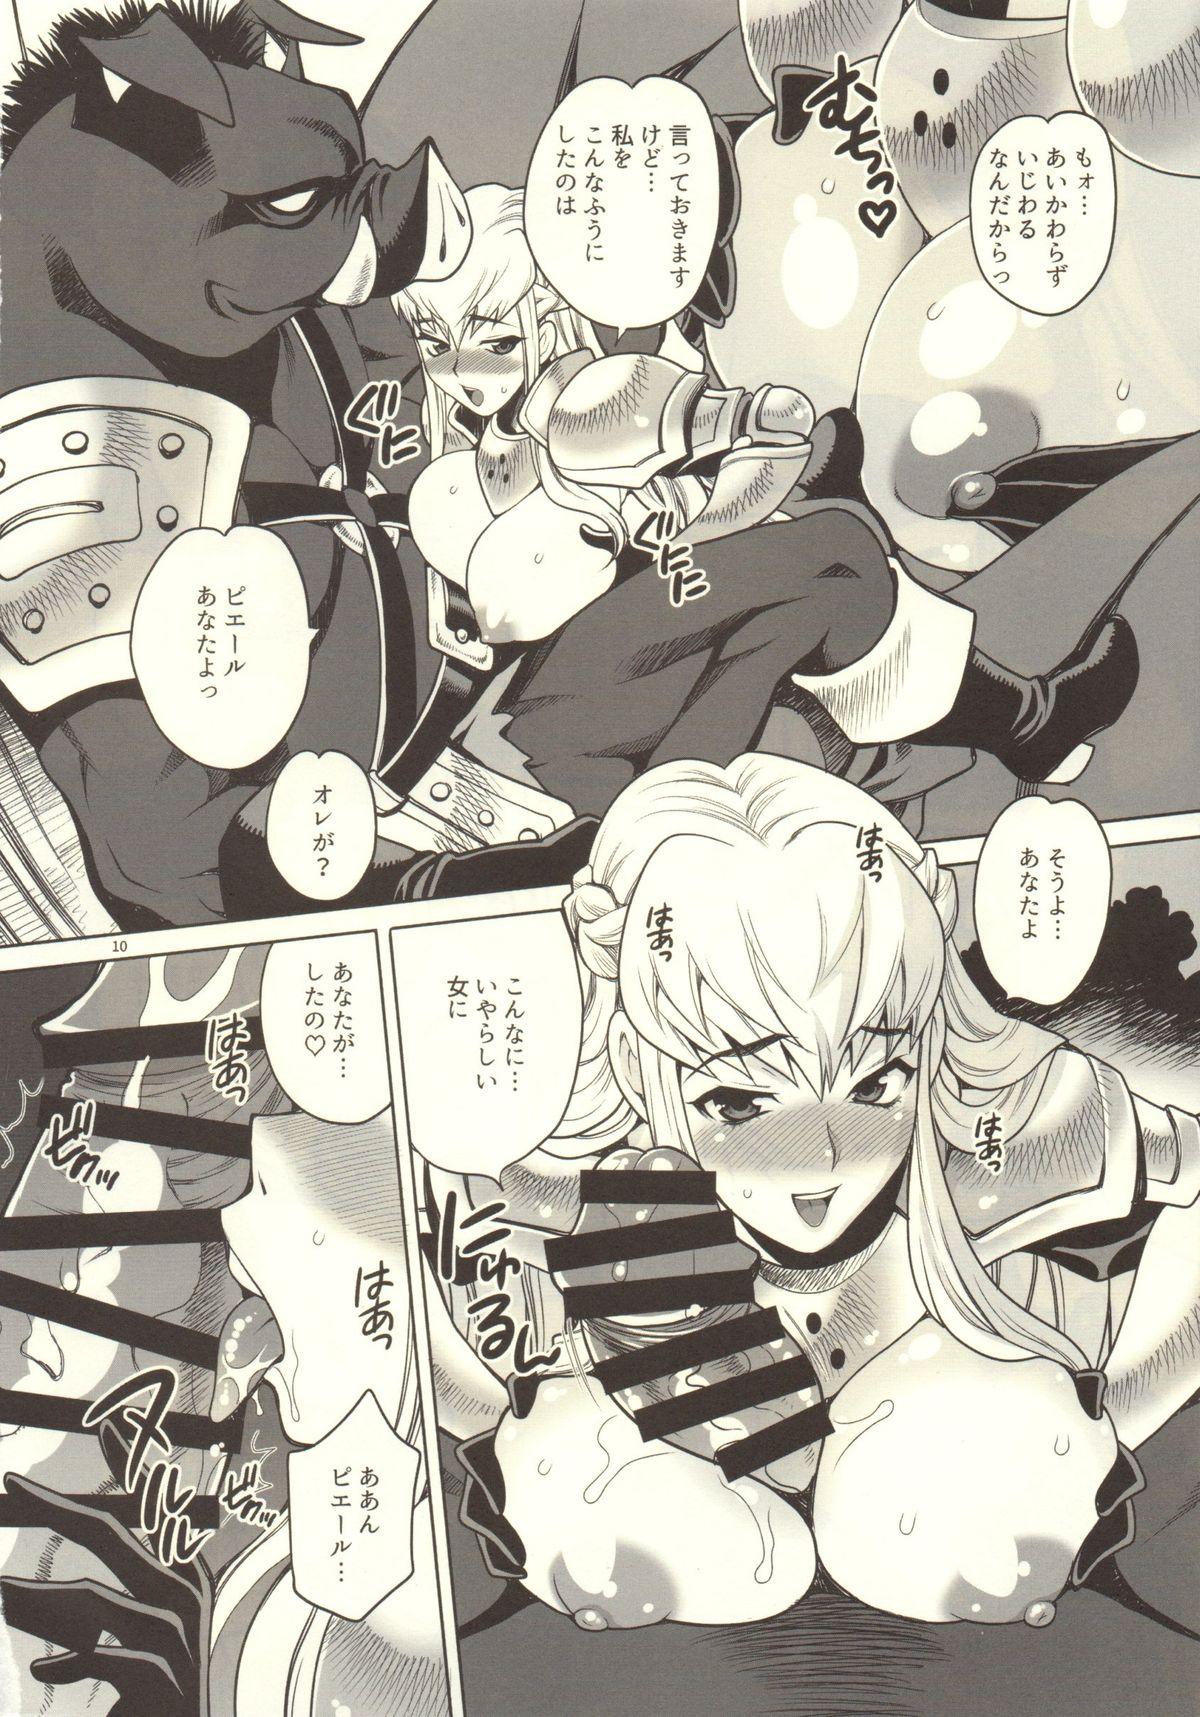 Yukiyanagi no Hon 37 Buta to Onnakishi - Lady knight in love with Orc 8